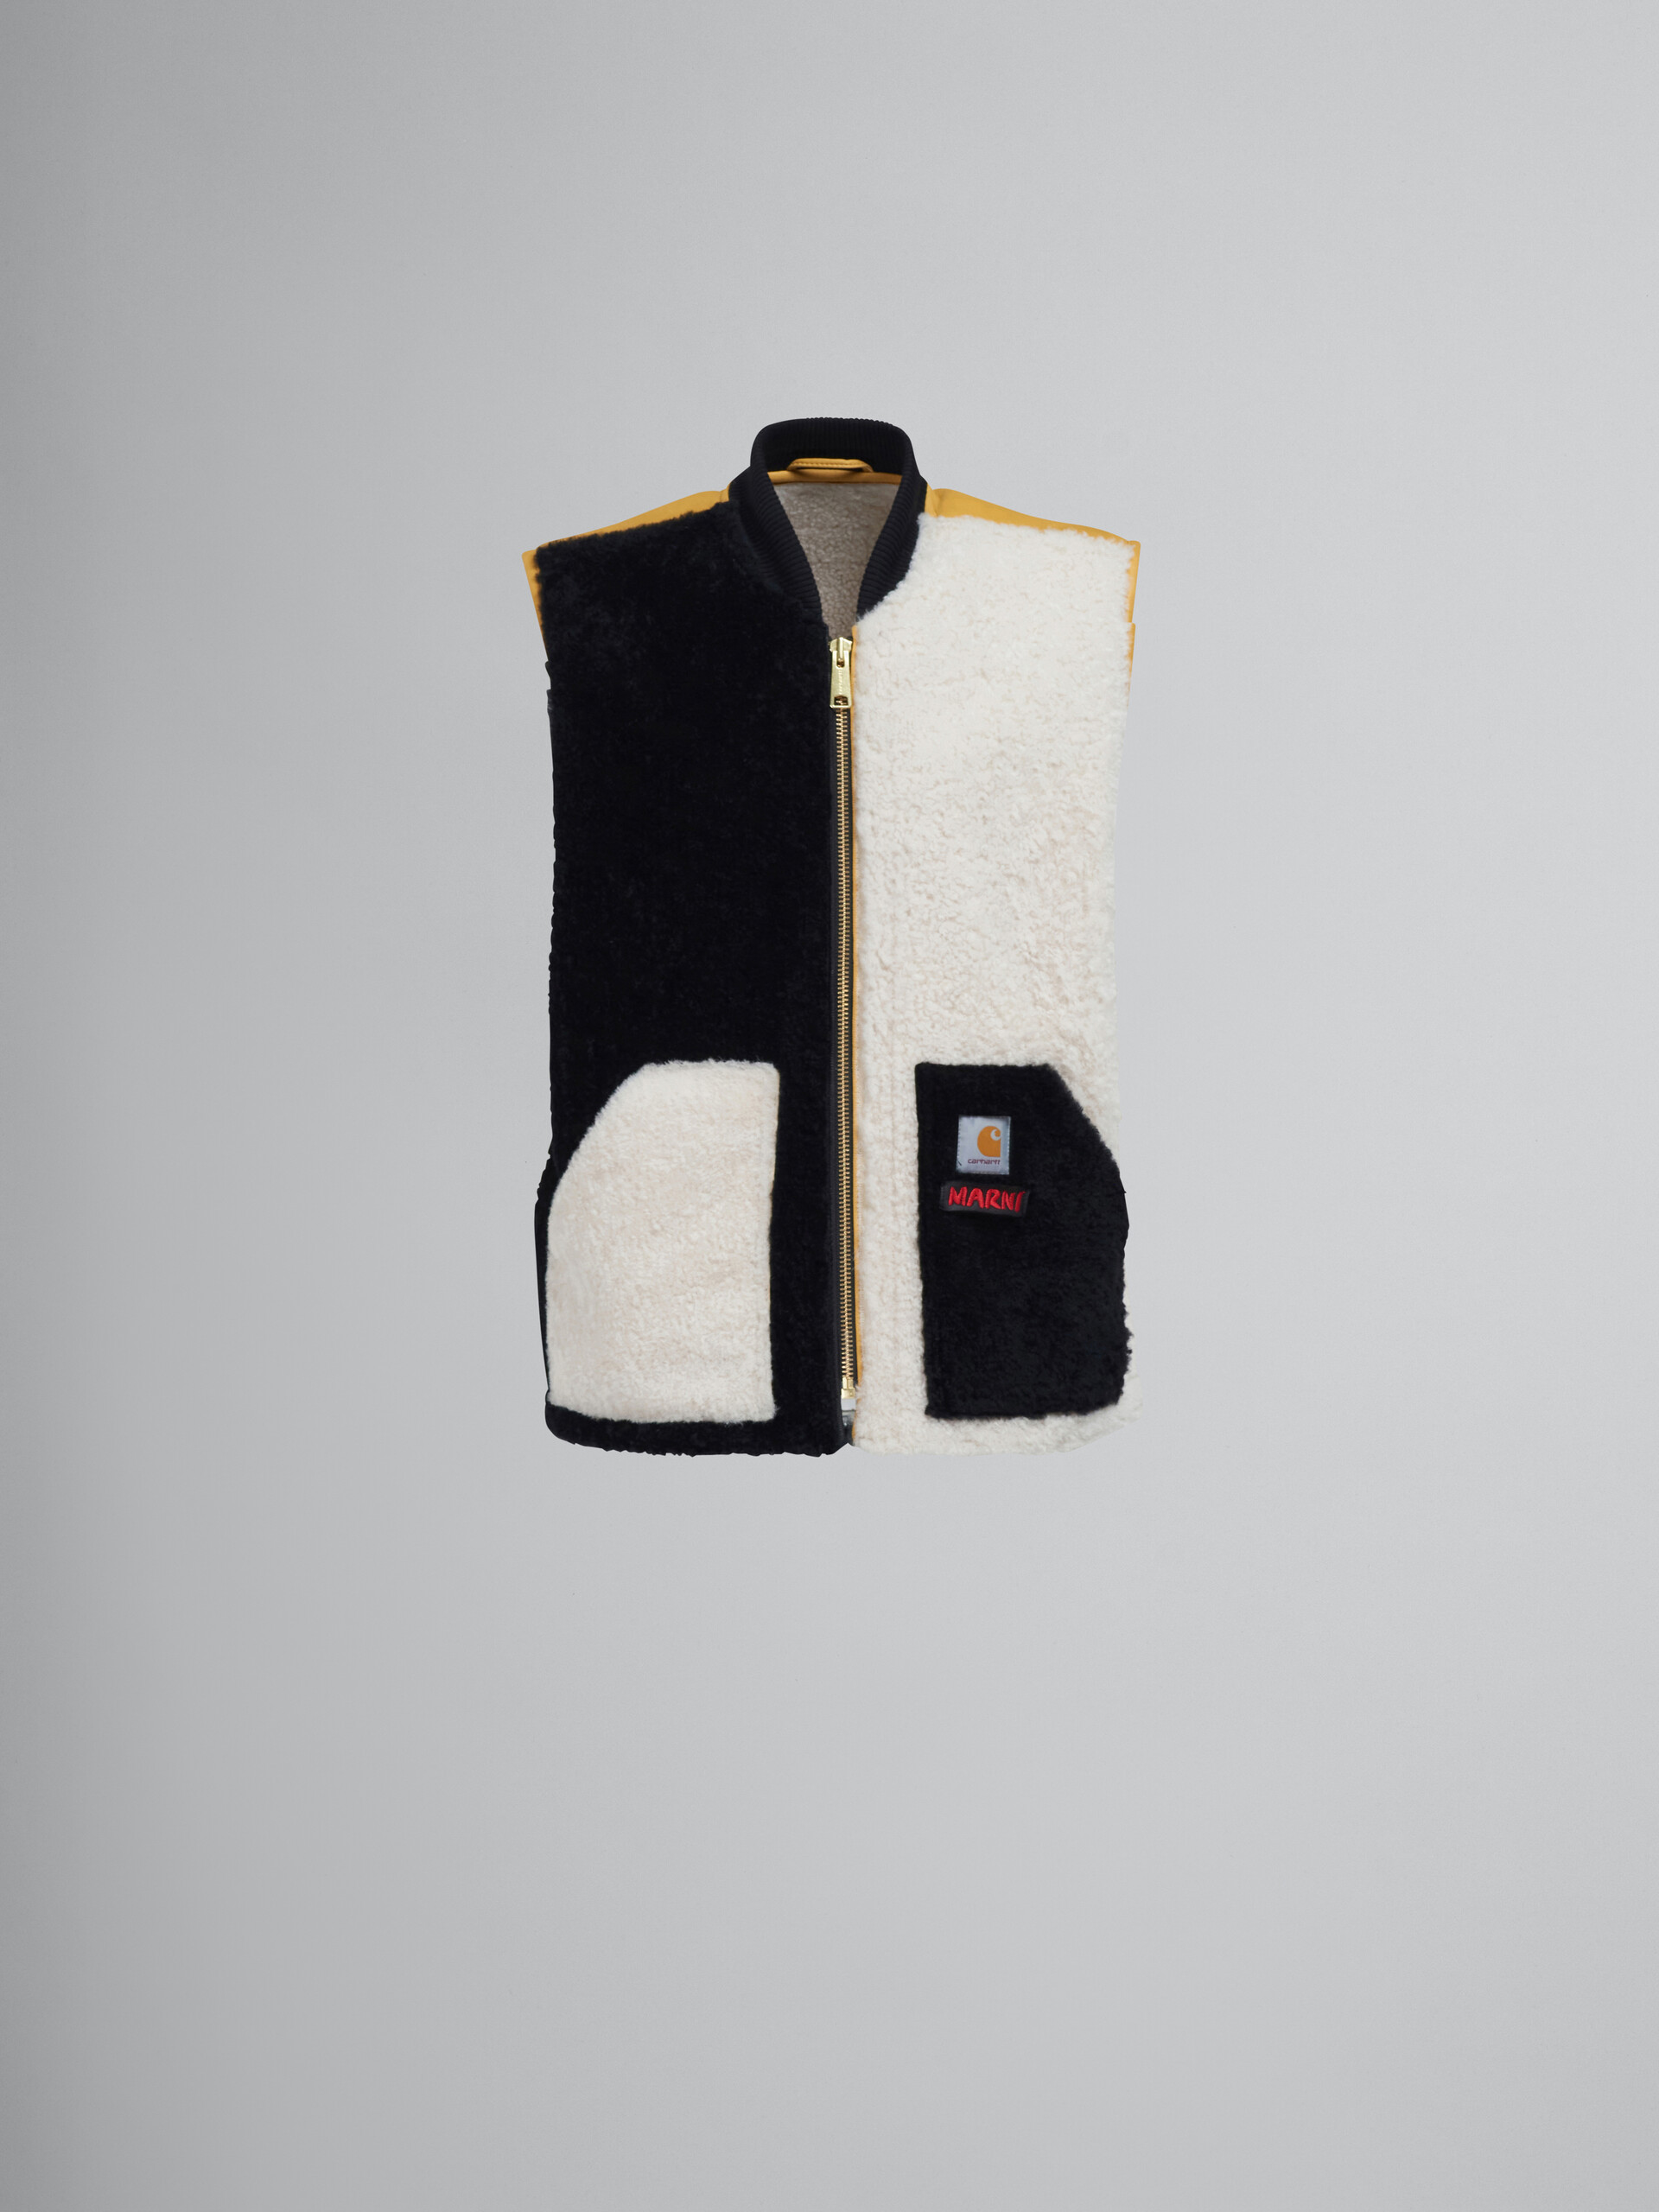 MARNI x CARHARTT WIP - black and white shearling gilet - Waistcoats - Image 1